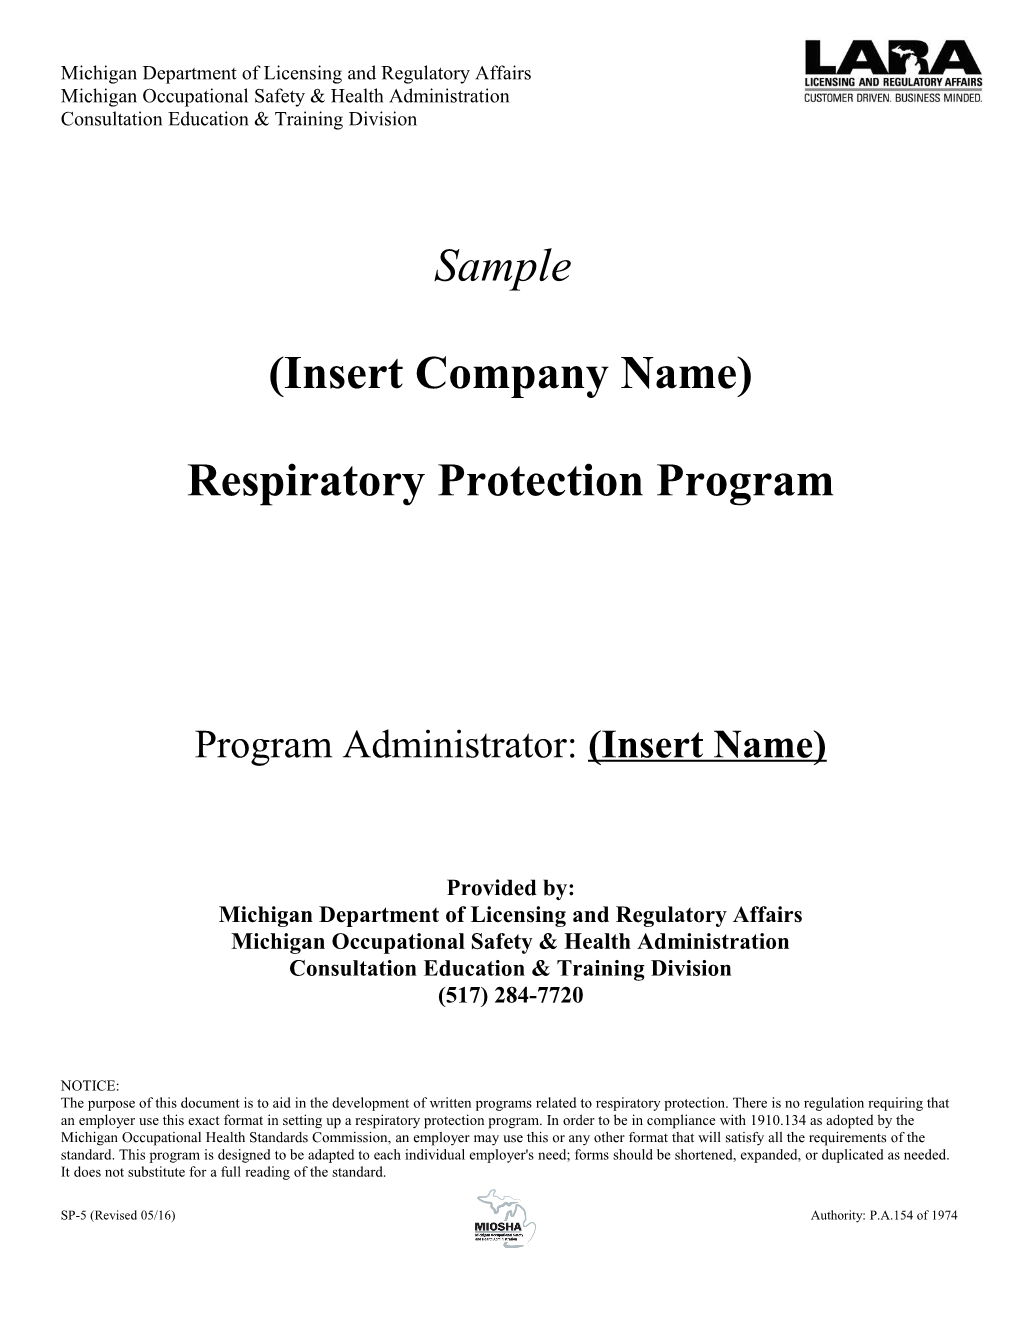 Sample Respiratory Protection Program